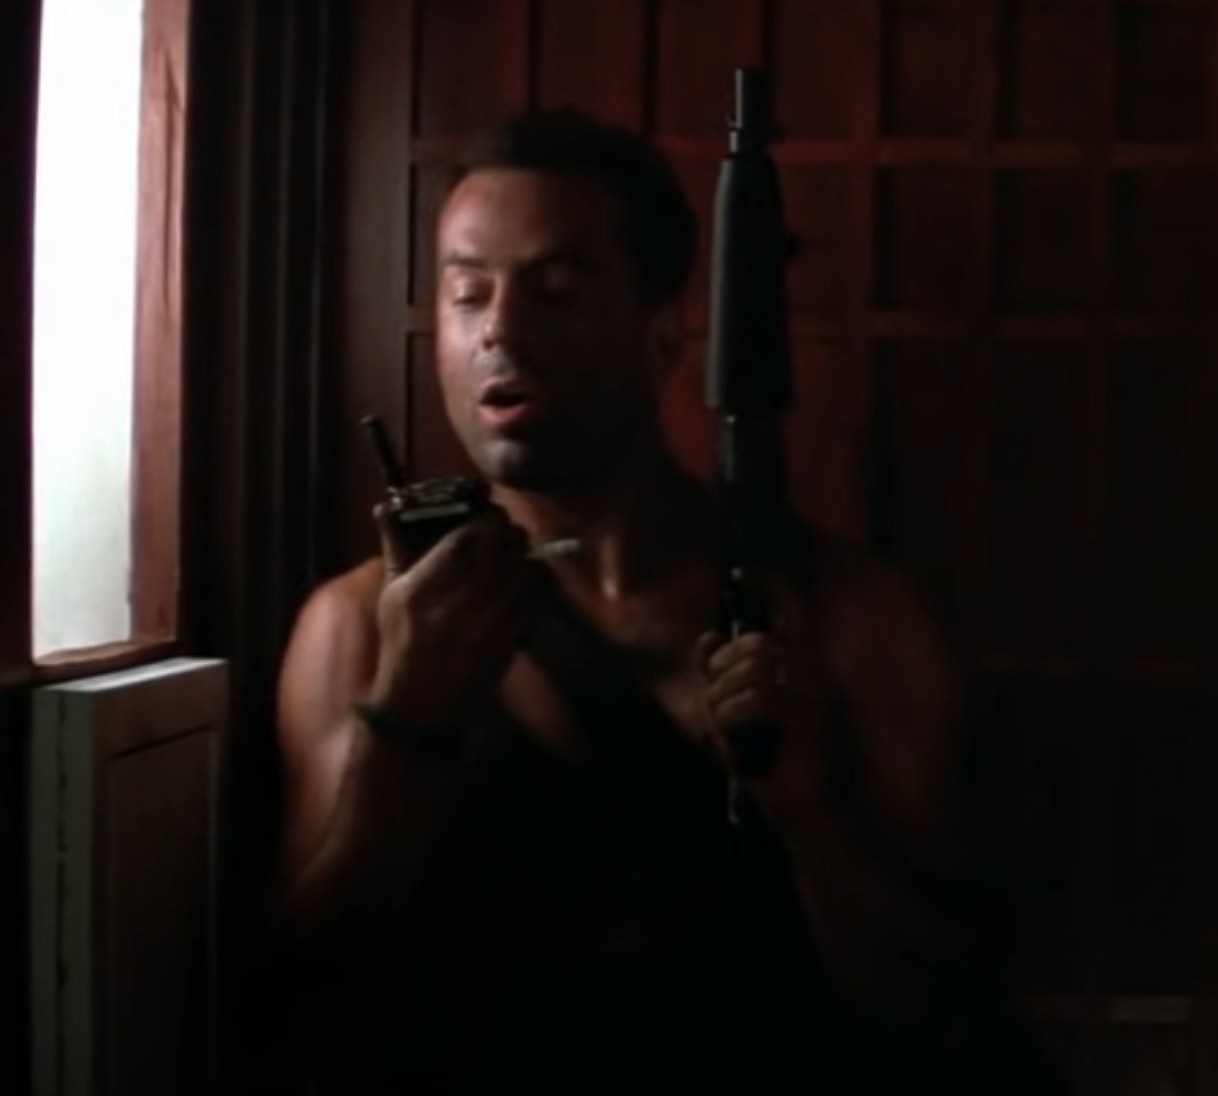 Bruce Willis as John McClane communicates with Hans via walkie-talkie in &quot;Die Hard&quot;